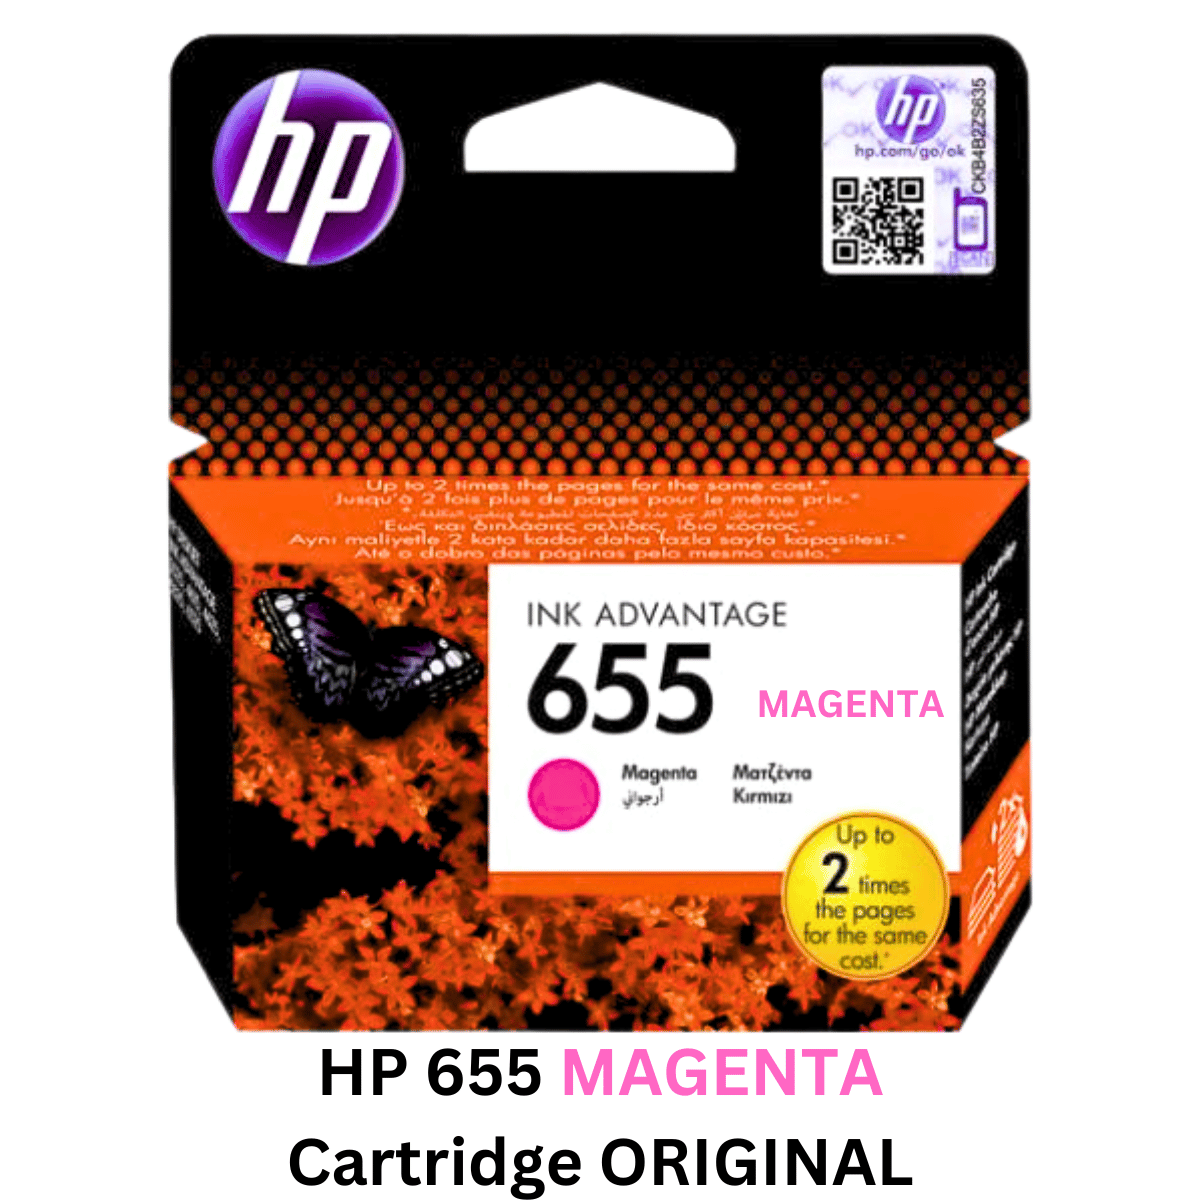 HP 655 Magenta Cartridge original - YOUTOO TRADING 